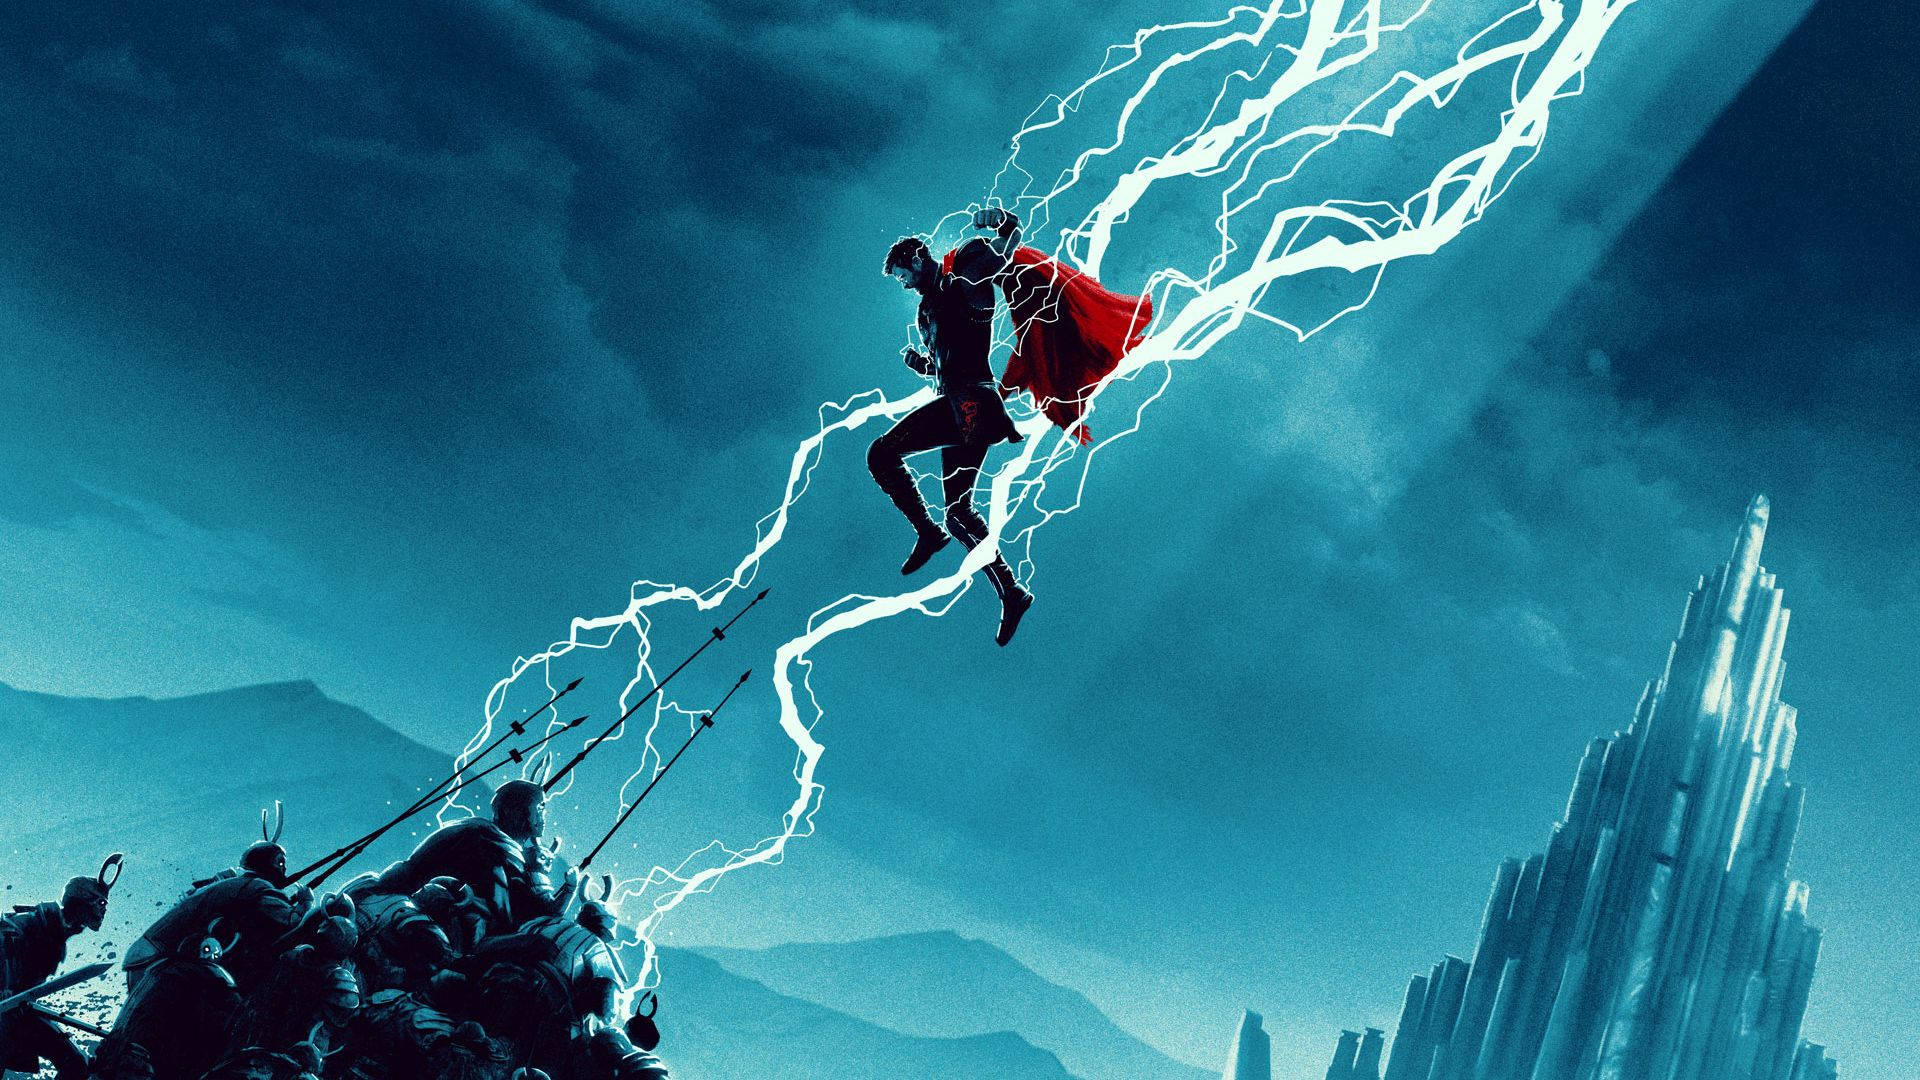 Thor Superhero Stormbreaker With Thunders Background